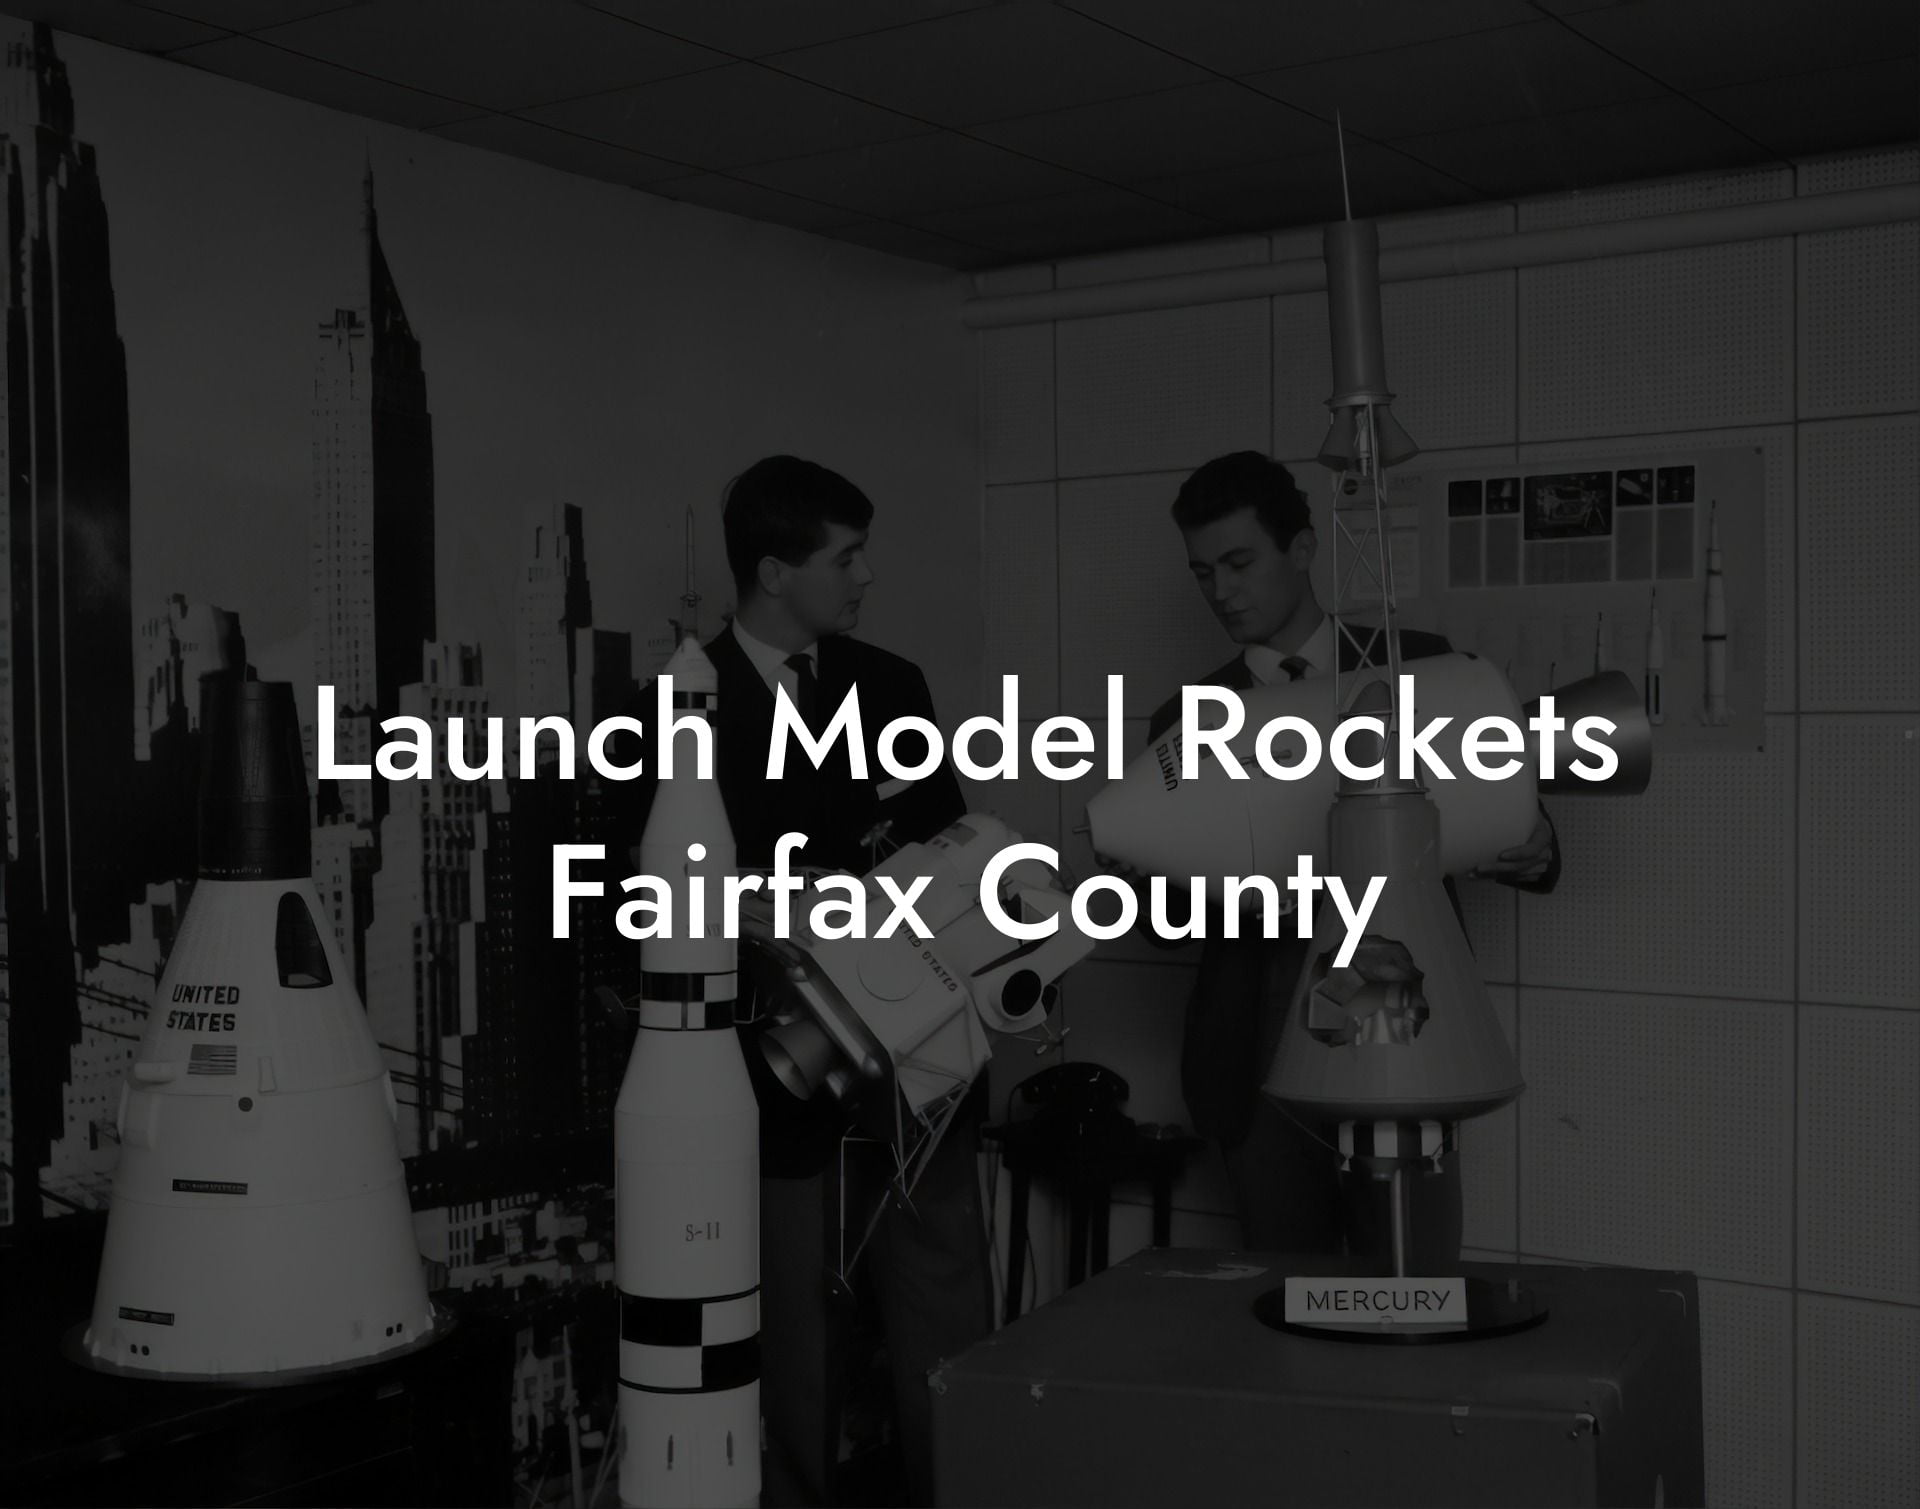 Launch Model Rockets Fairfax County